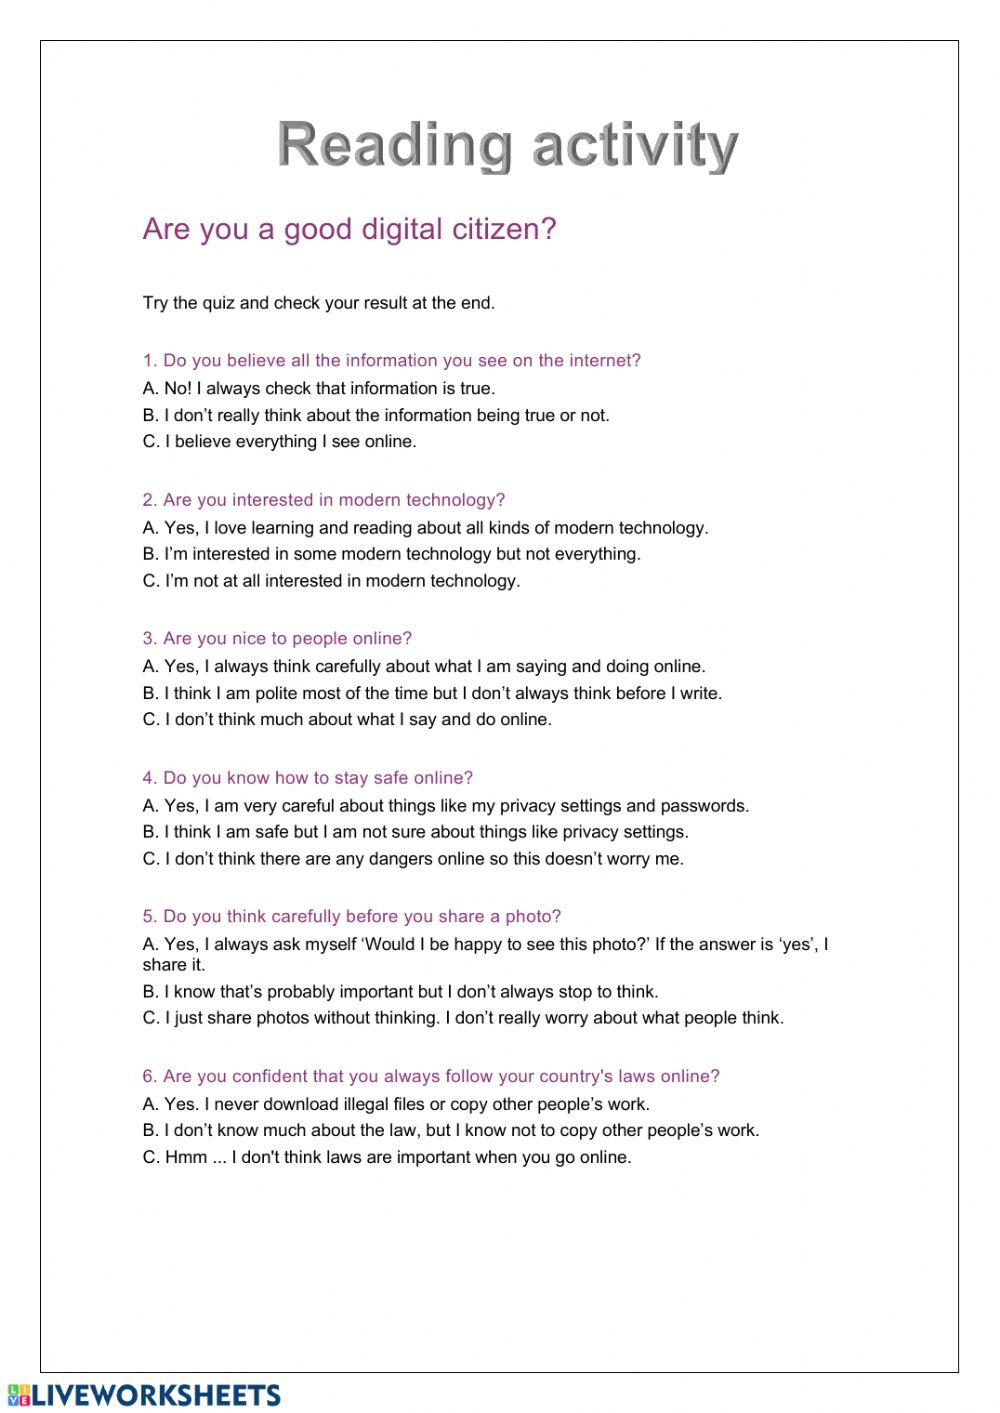 Digital citizens